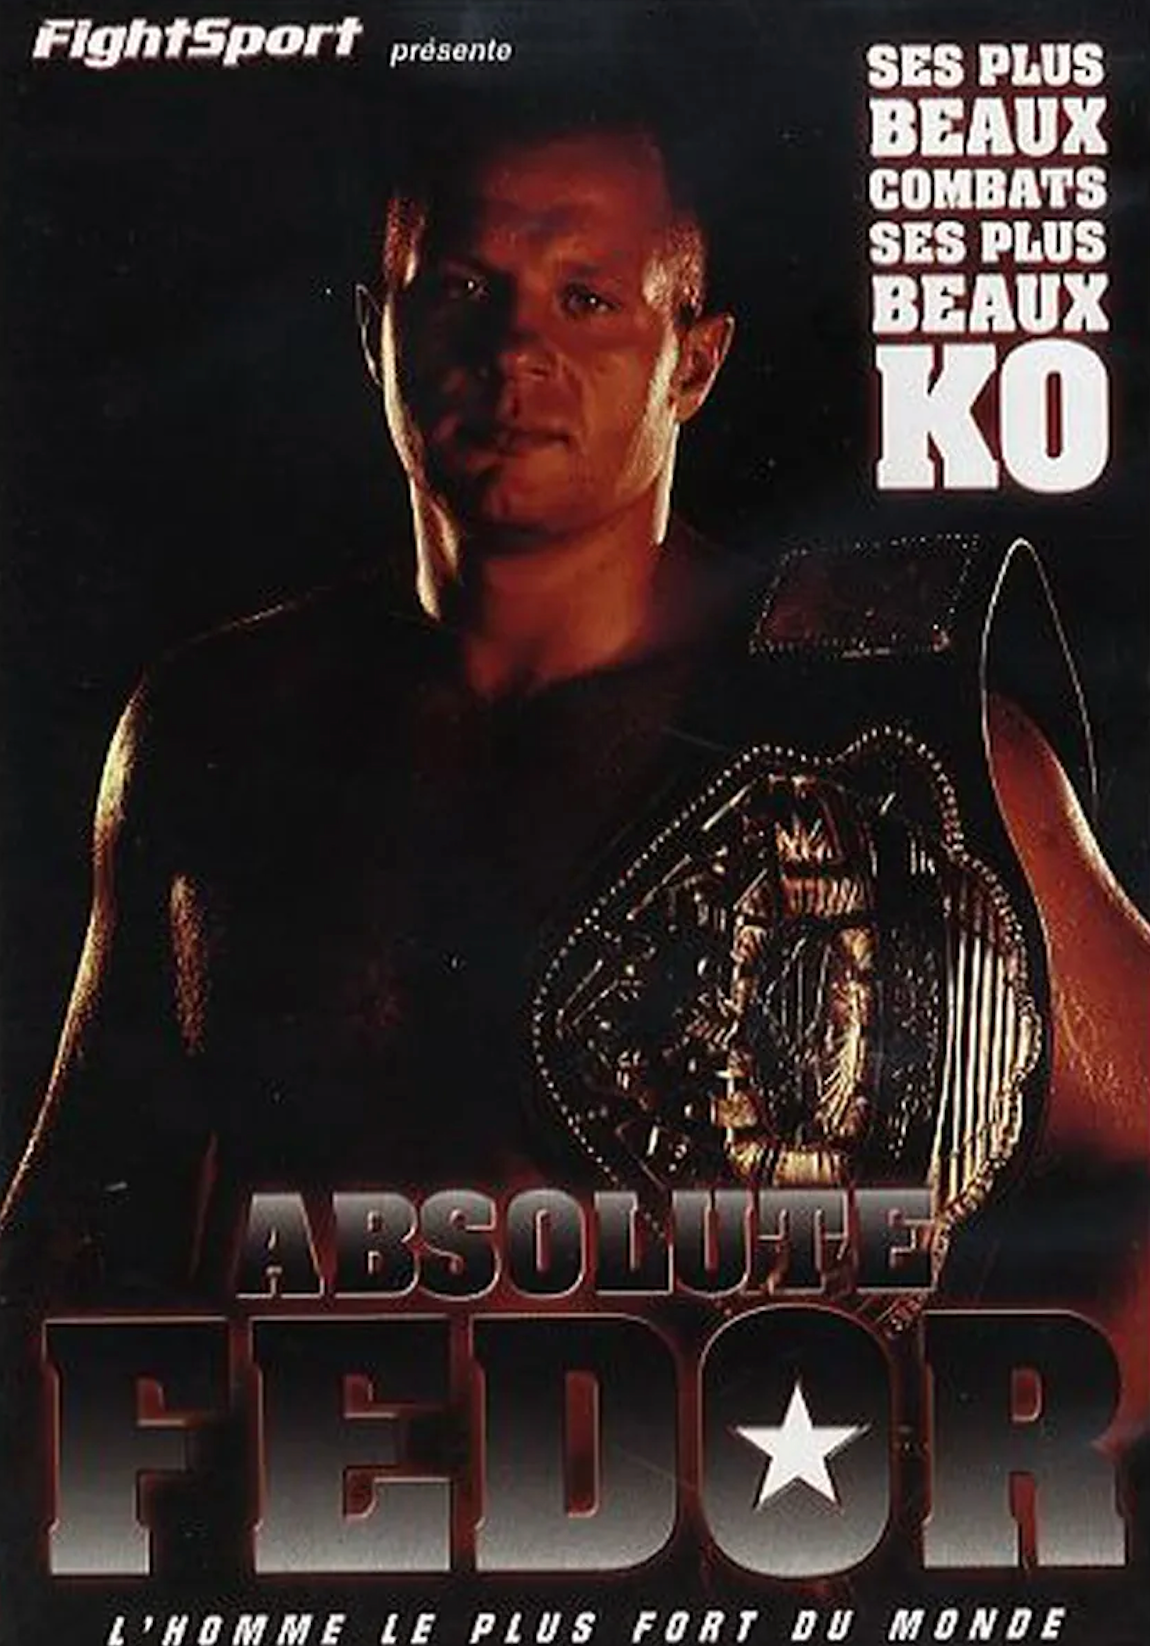 Absolute Fedor DVD with Fedor Emelianenko (Preowned)